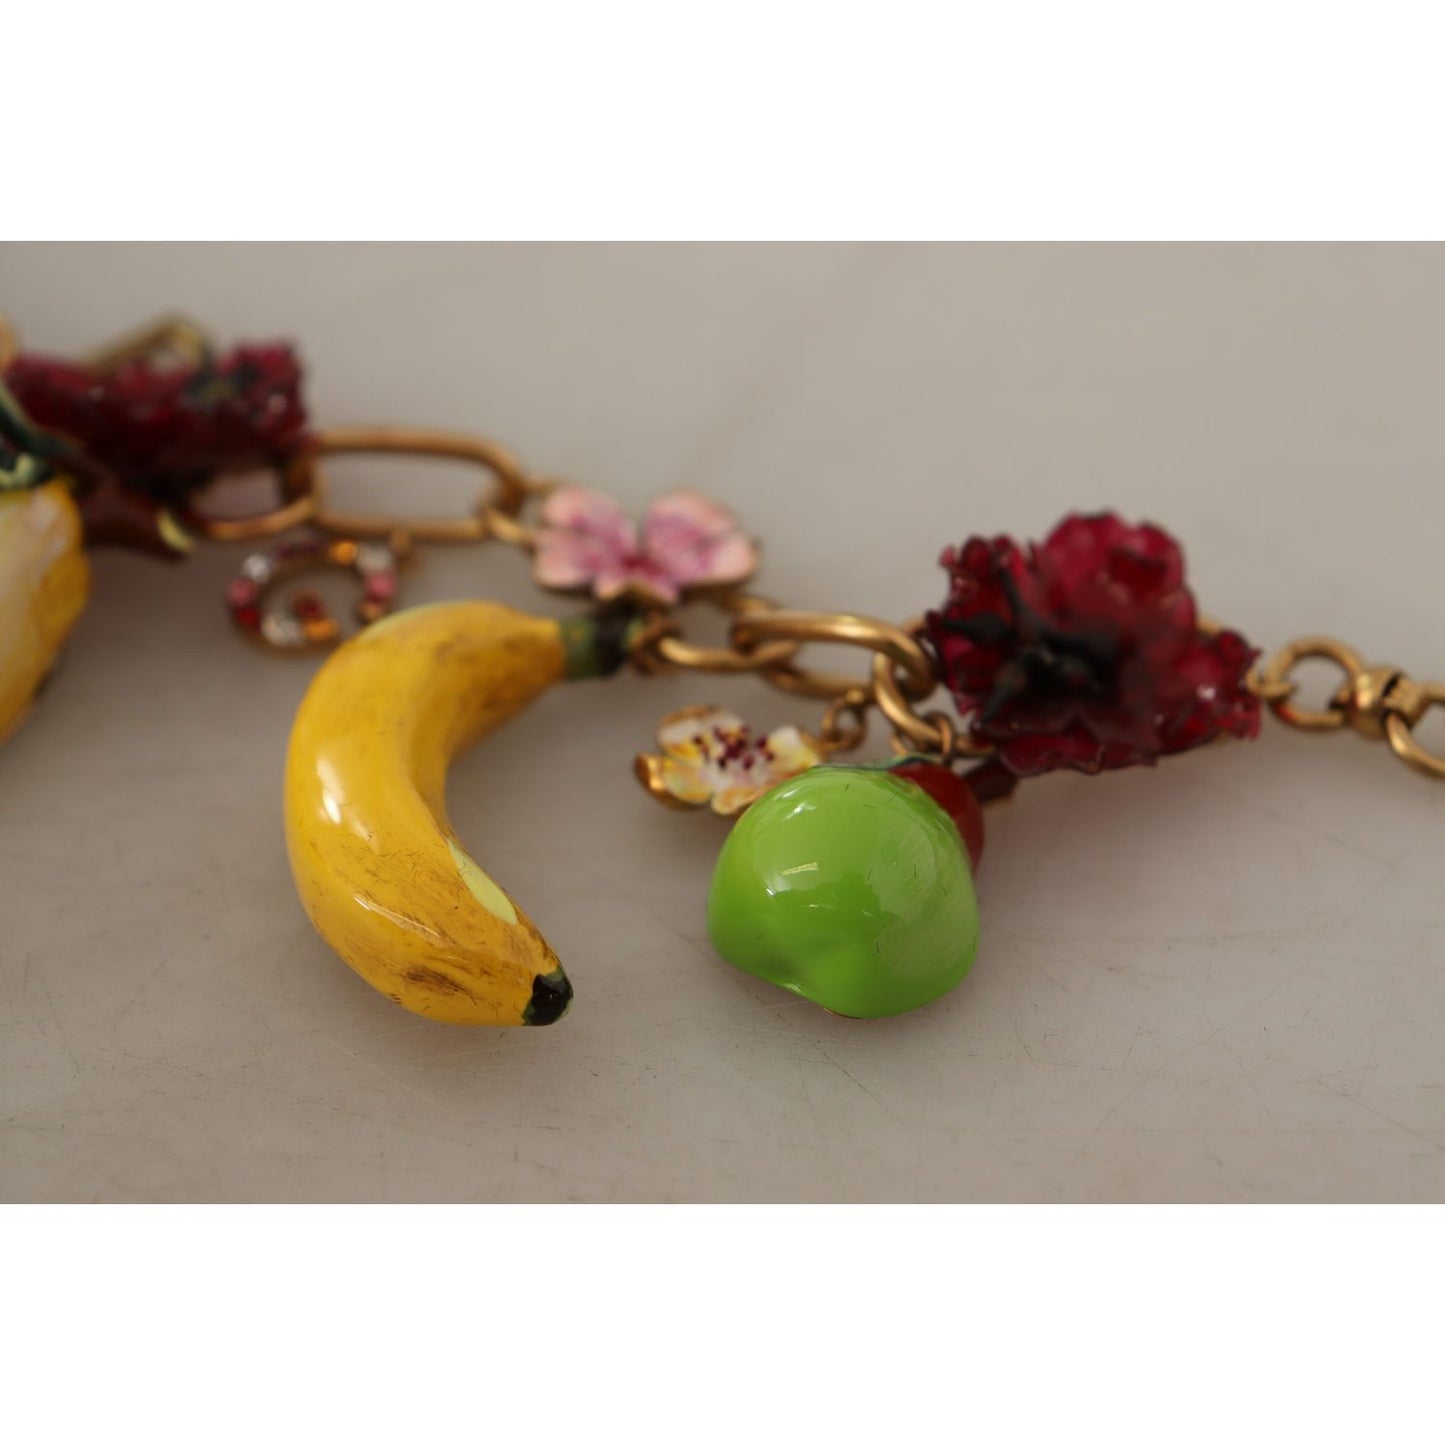 Dolce & Gabbana Chic Gold Statement Sicily Fruit Necklace WOMAN NECKLACE gold-brass-sicily-fruits-roses-statement-necklace IMG_1917-scaled-bd49e563-6da.jpg